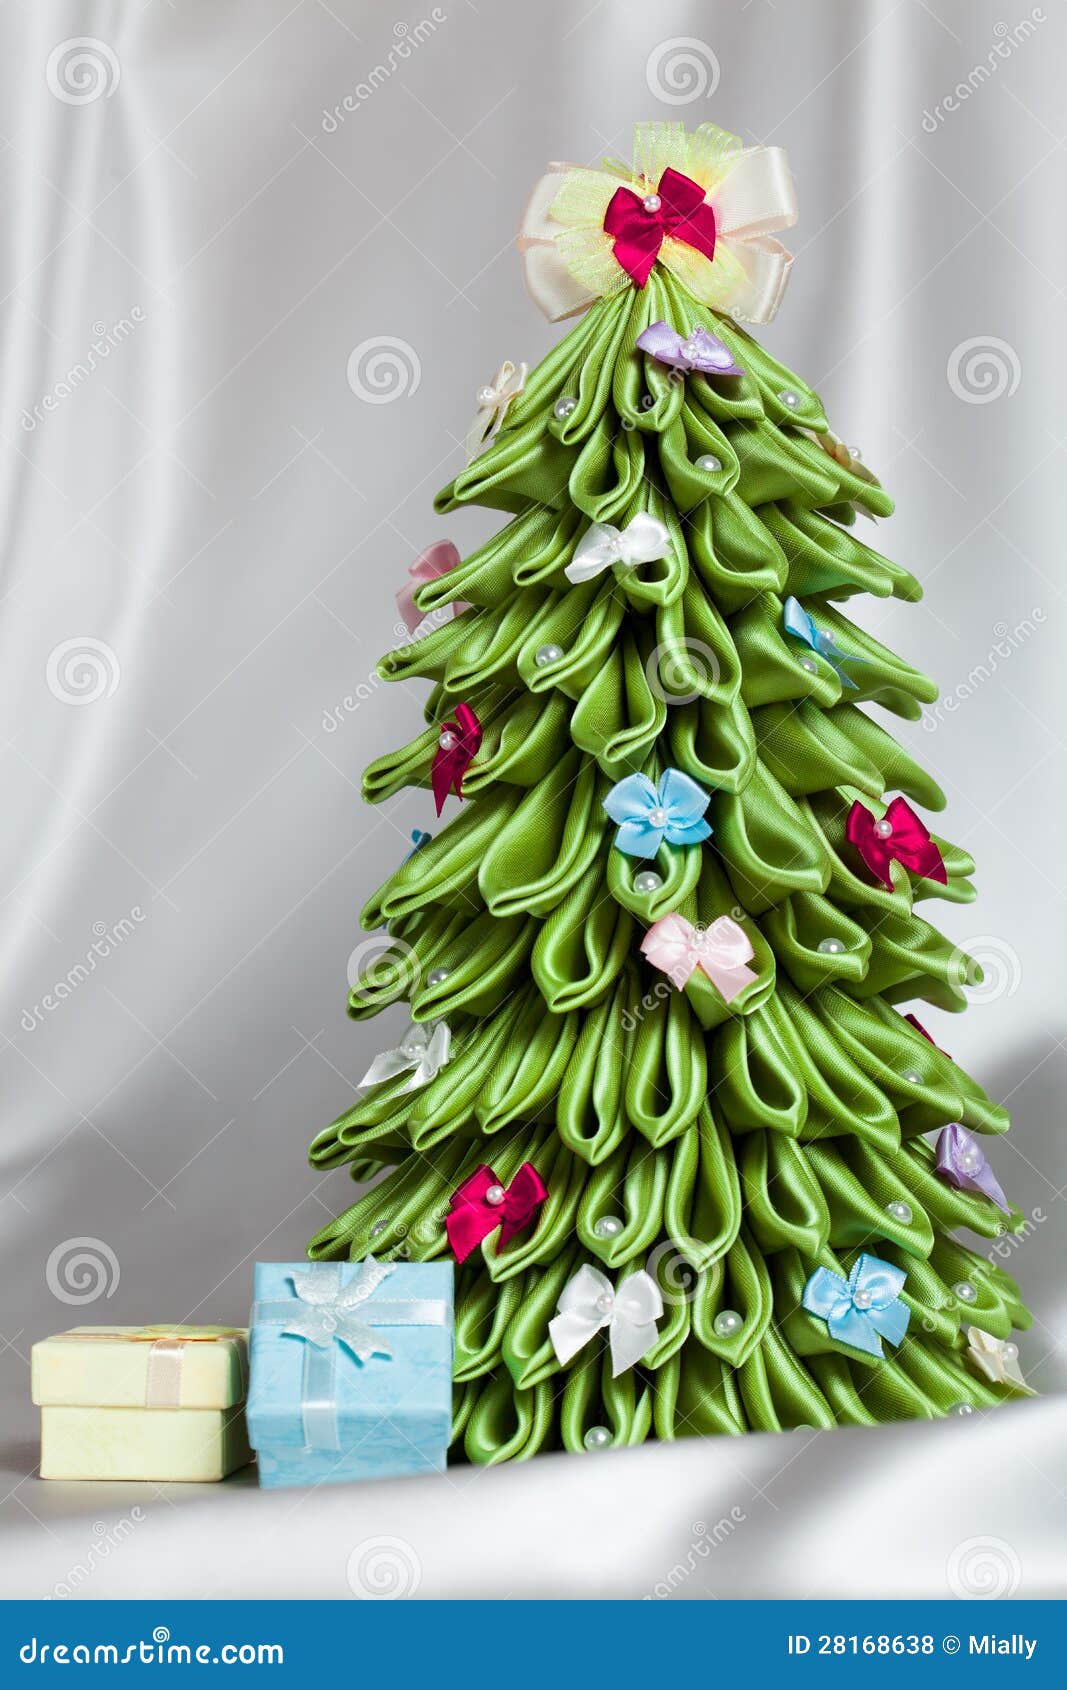 Handmade Fabric Christmas Tree Royalty Free Stock Photos 